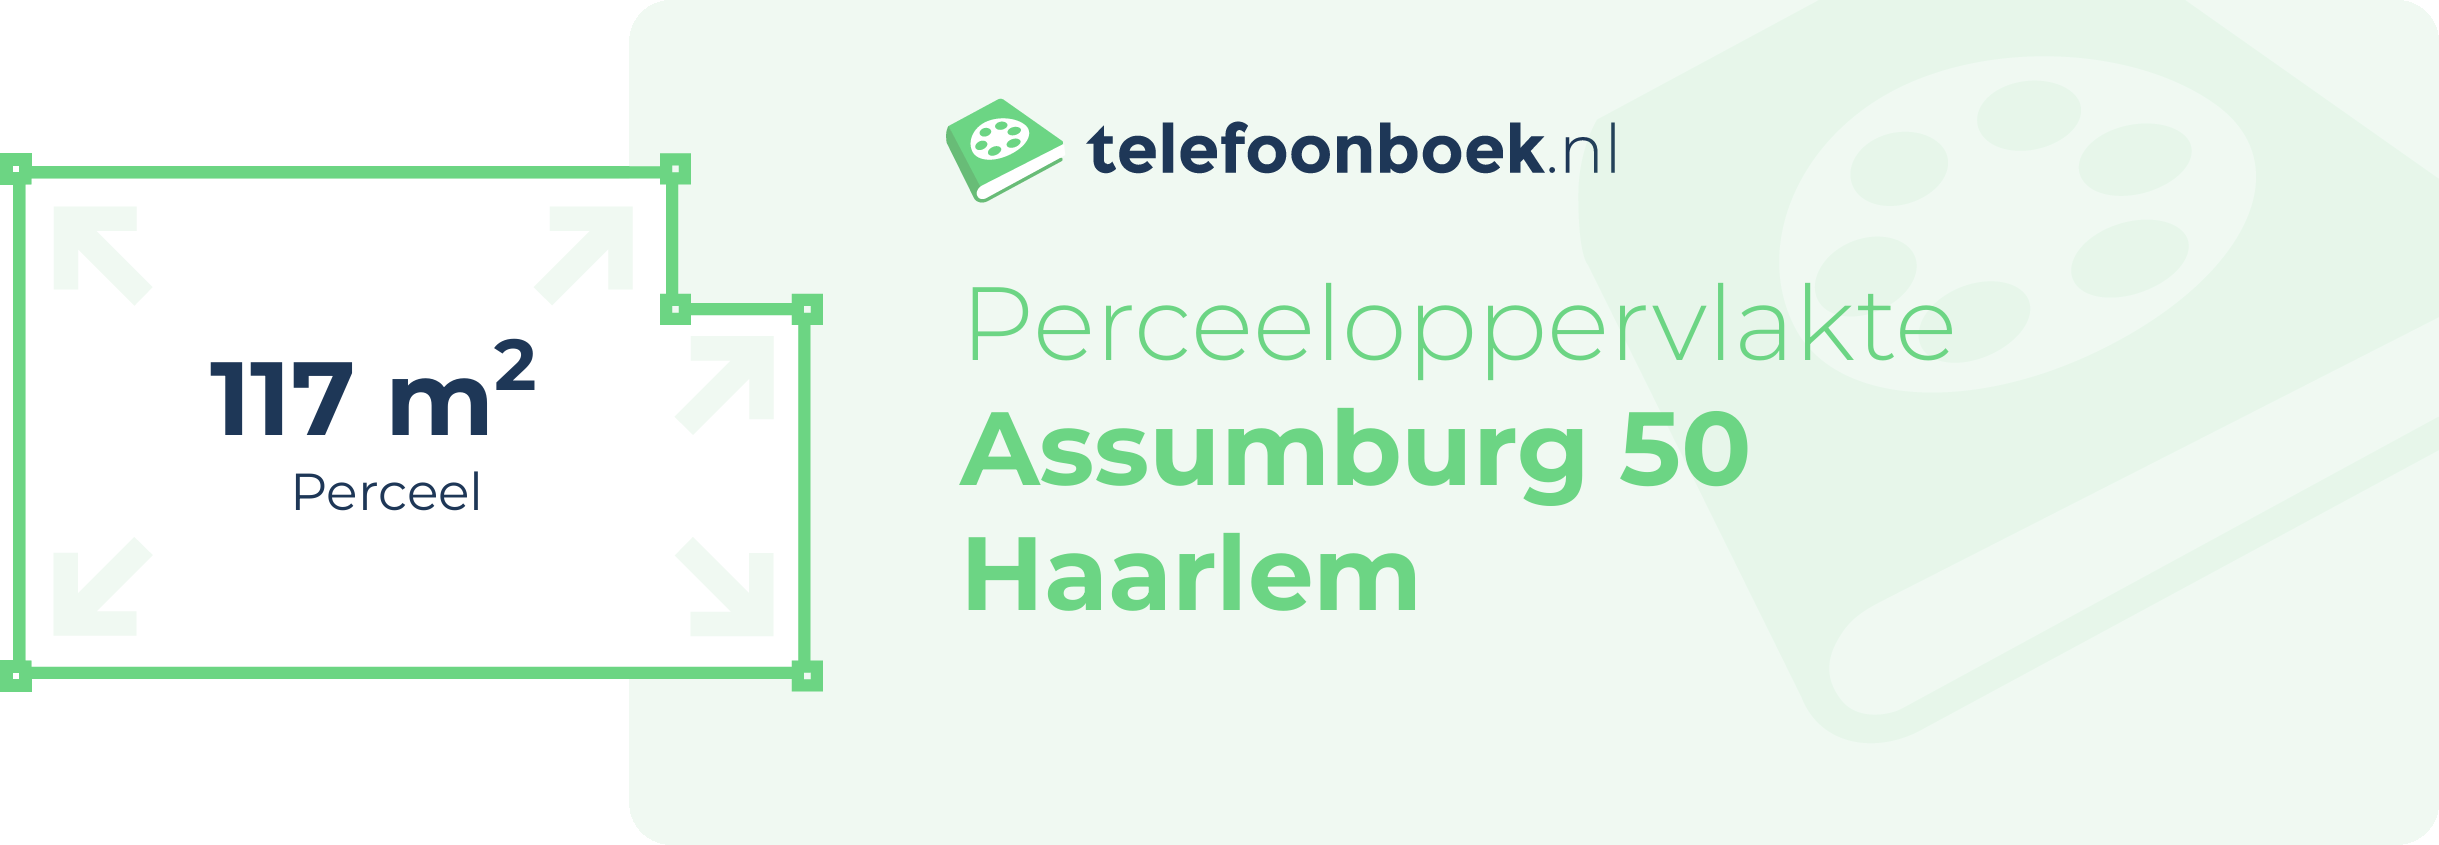 Perceeloppervlakte Assumburg 50 Haarlem